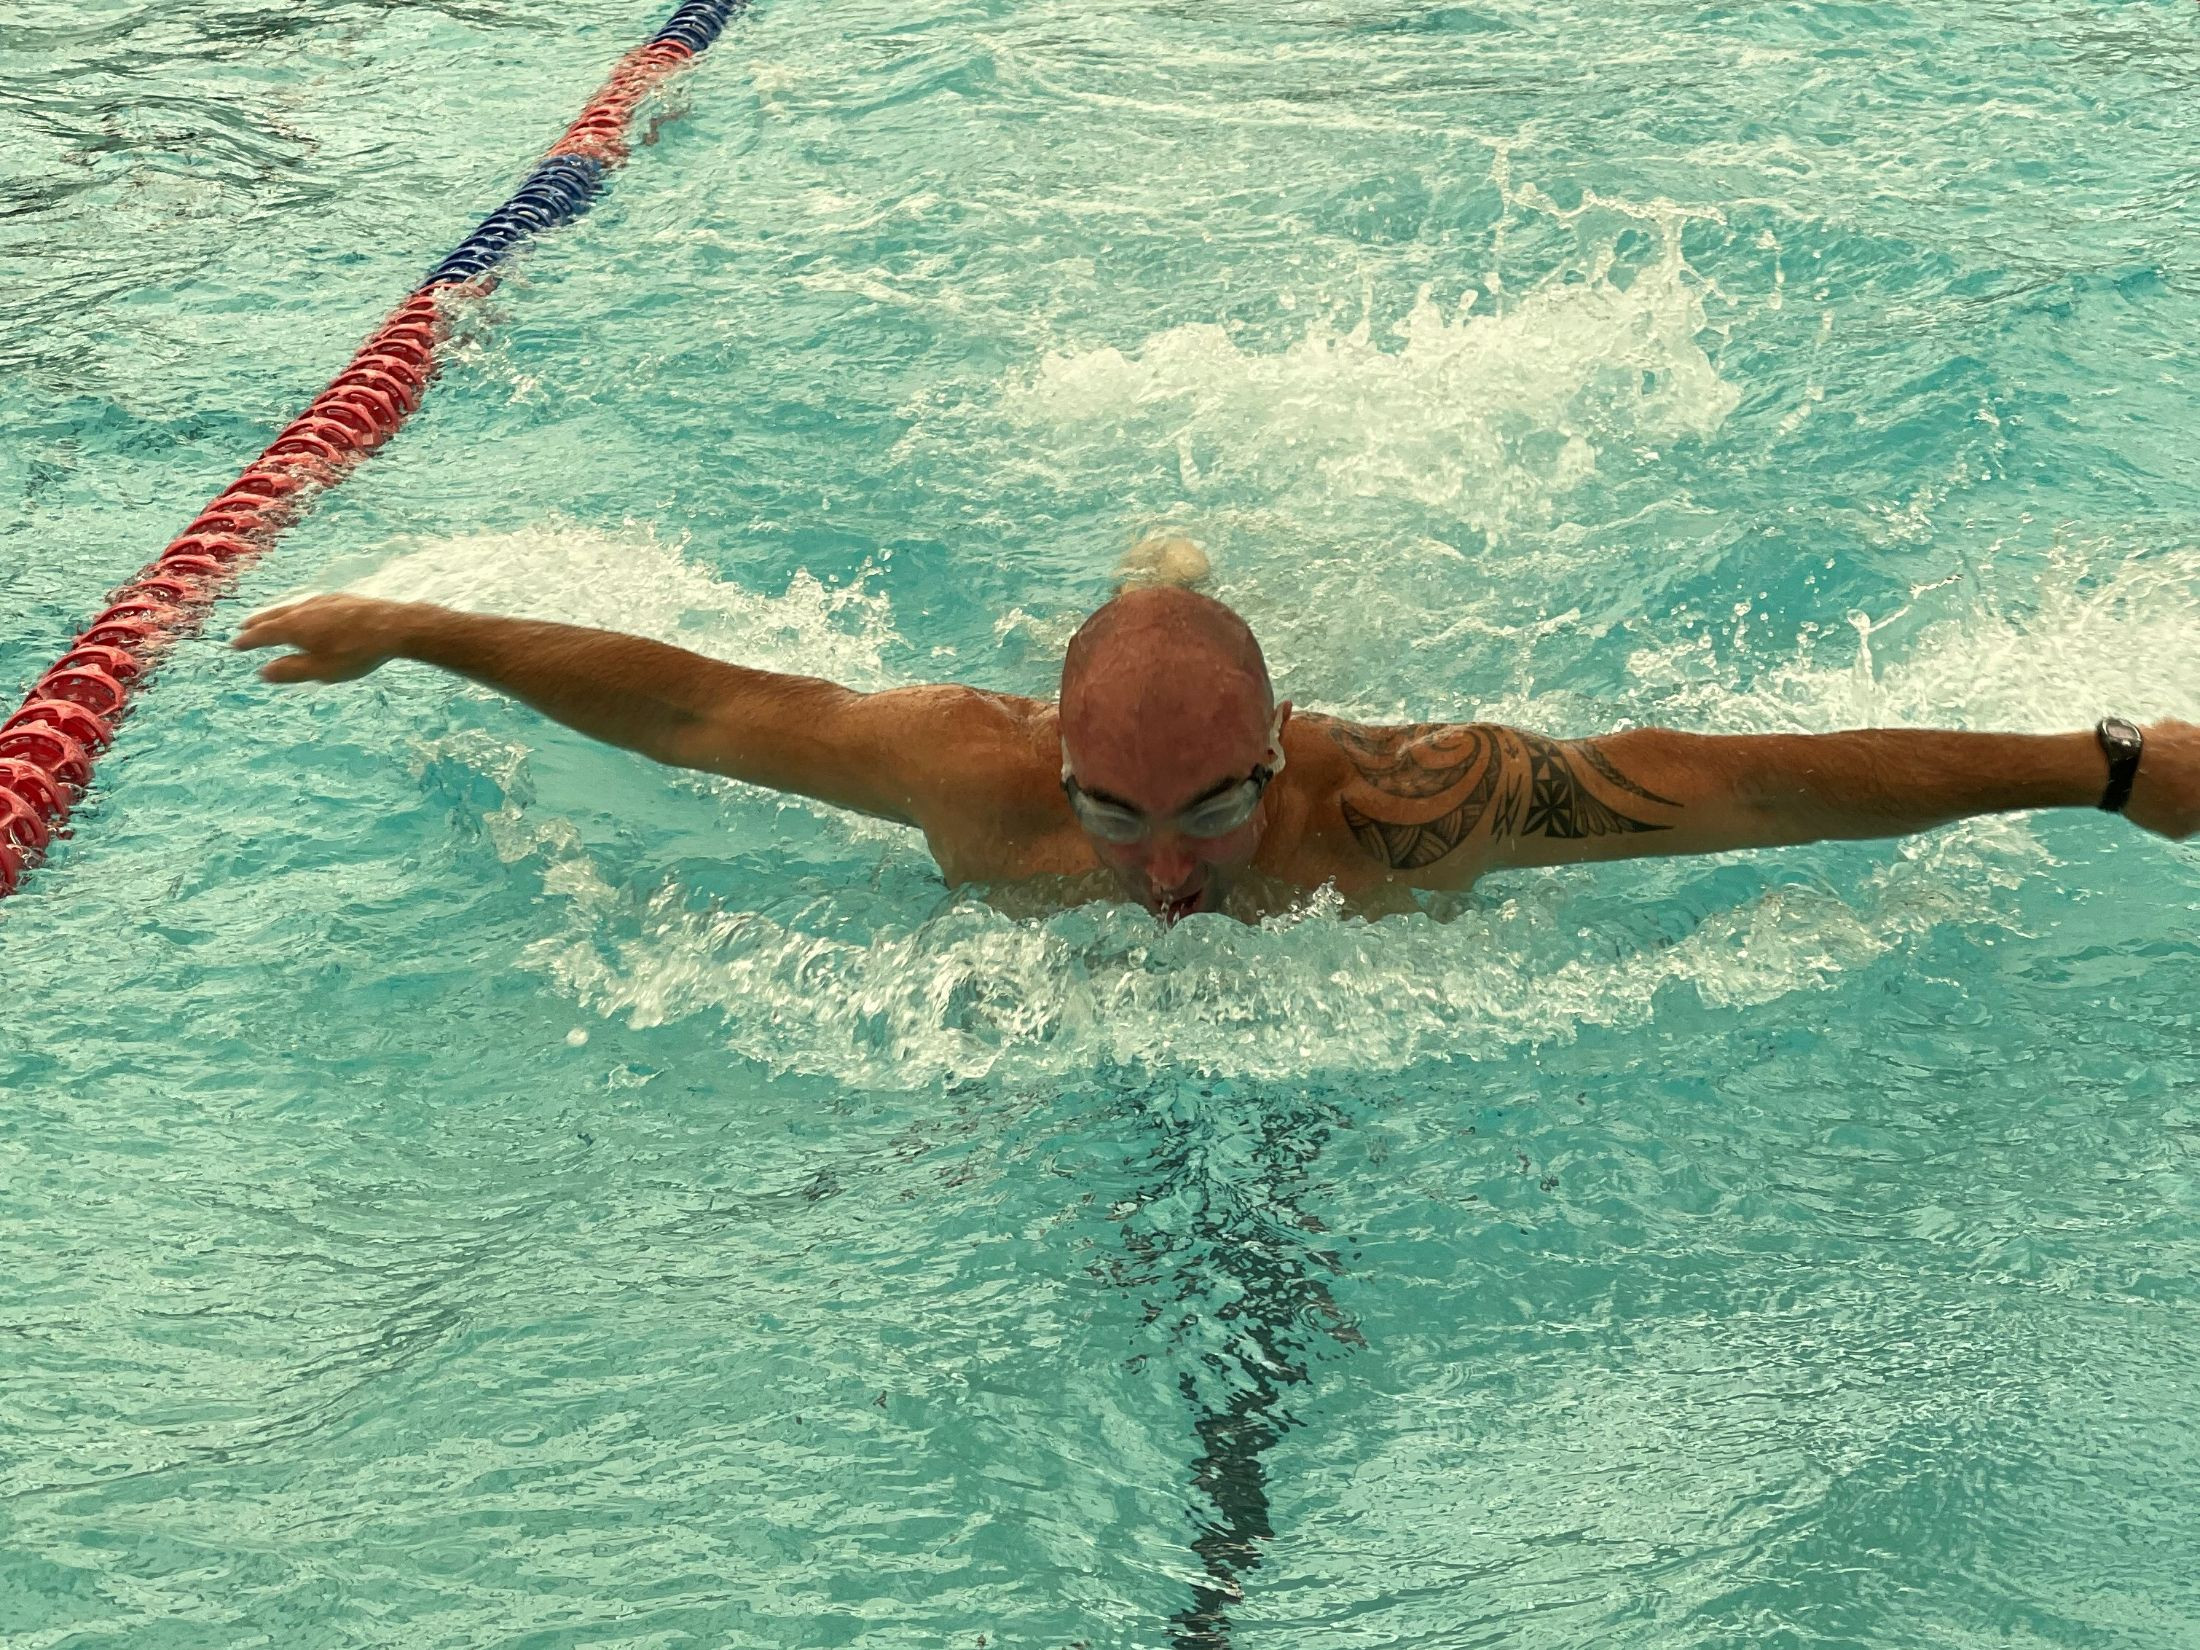 Swimming Sports